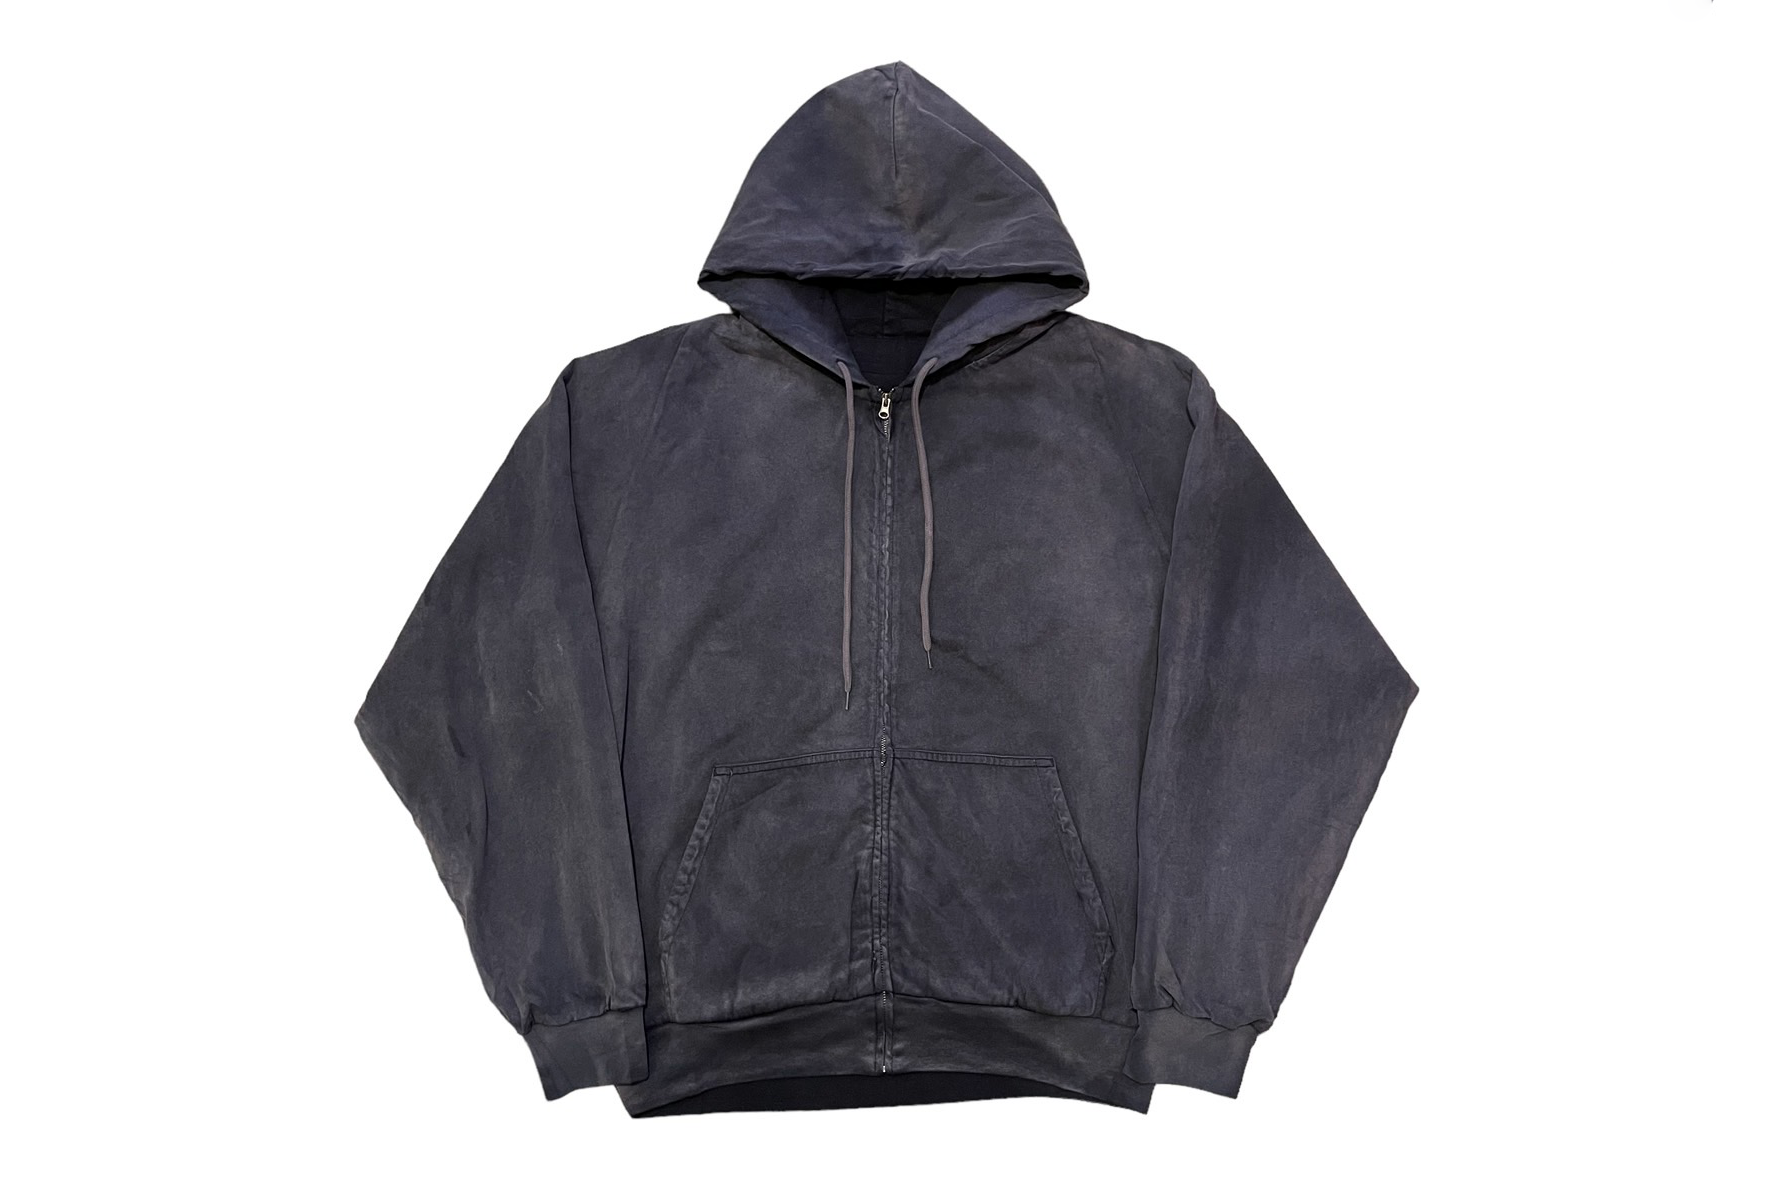 Unreleased YEEZY GAP zip up hoodies & sweatpants releasing in Japan